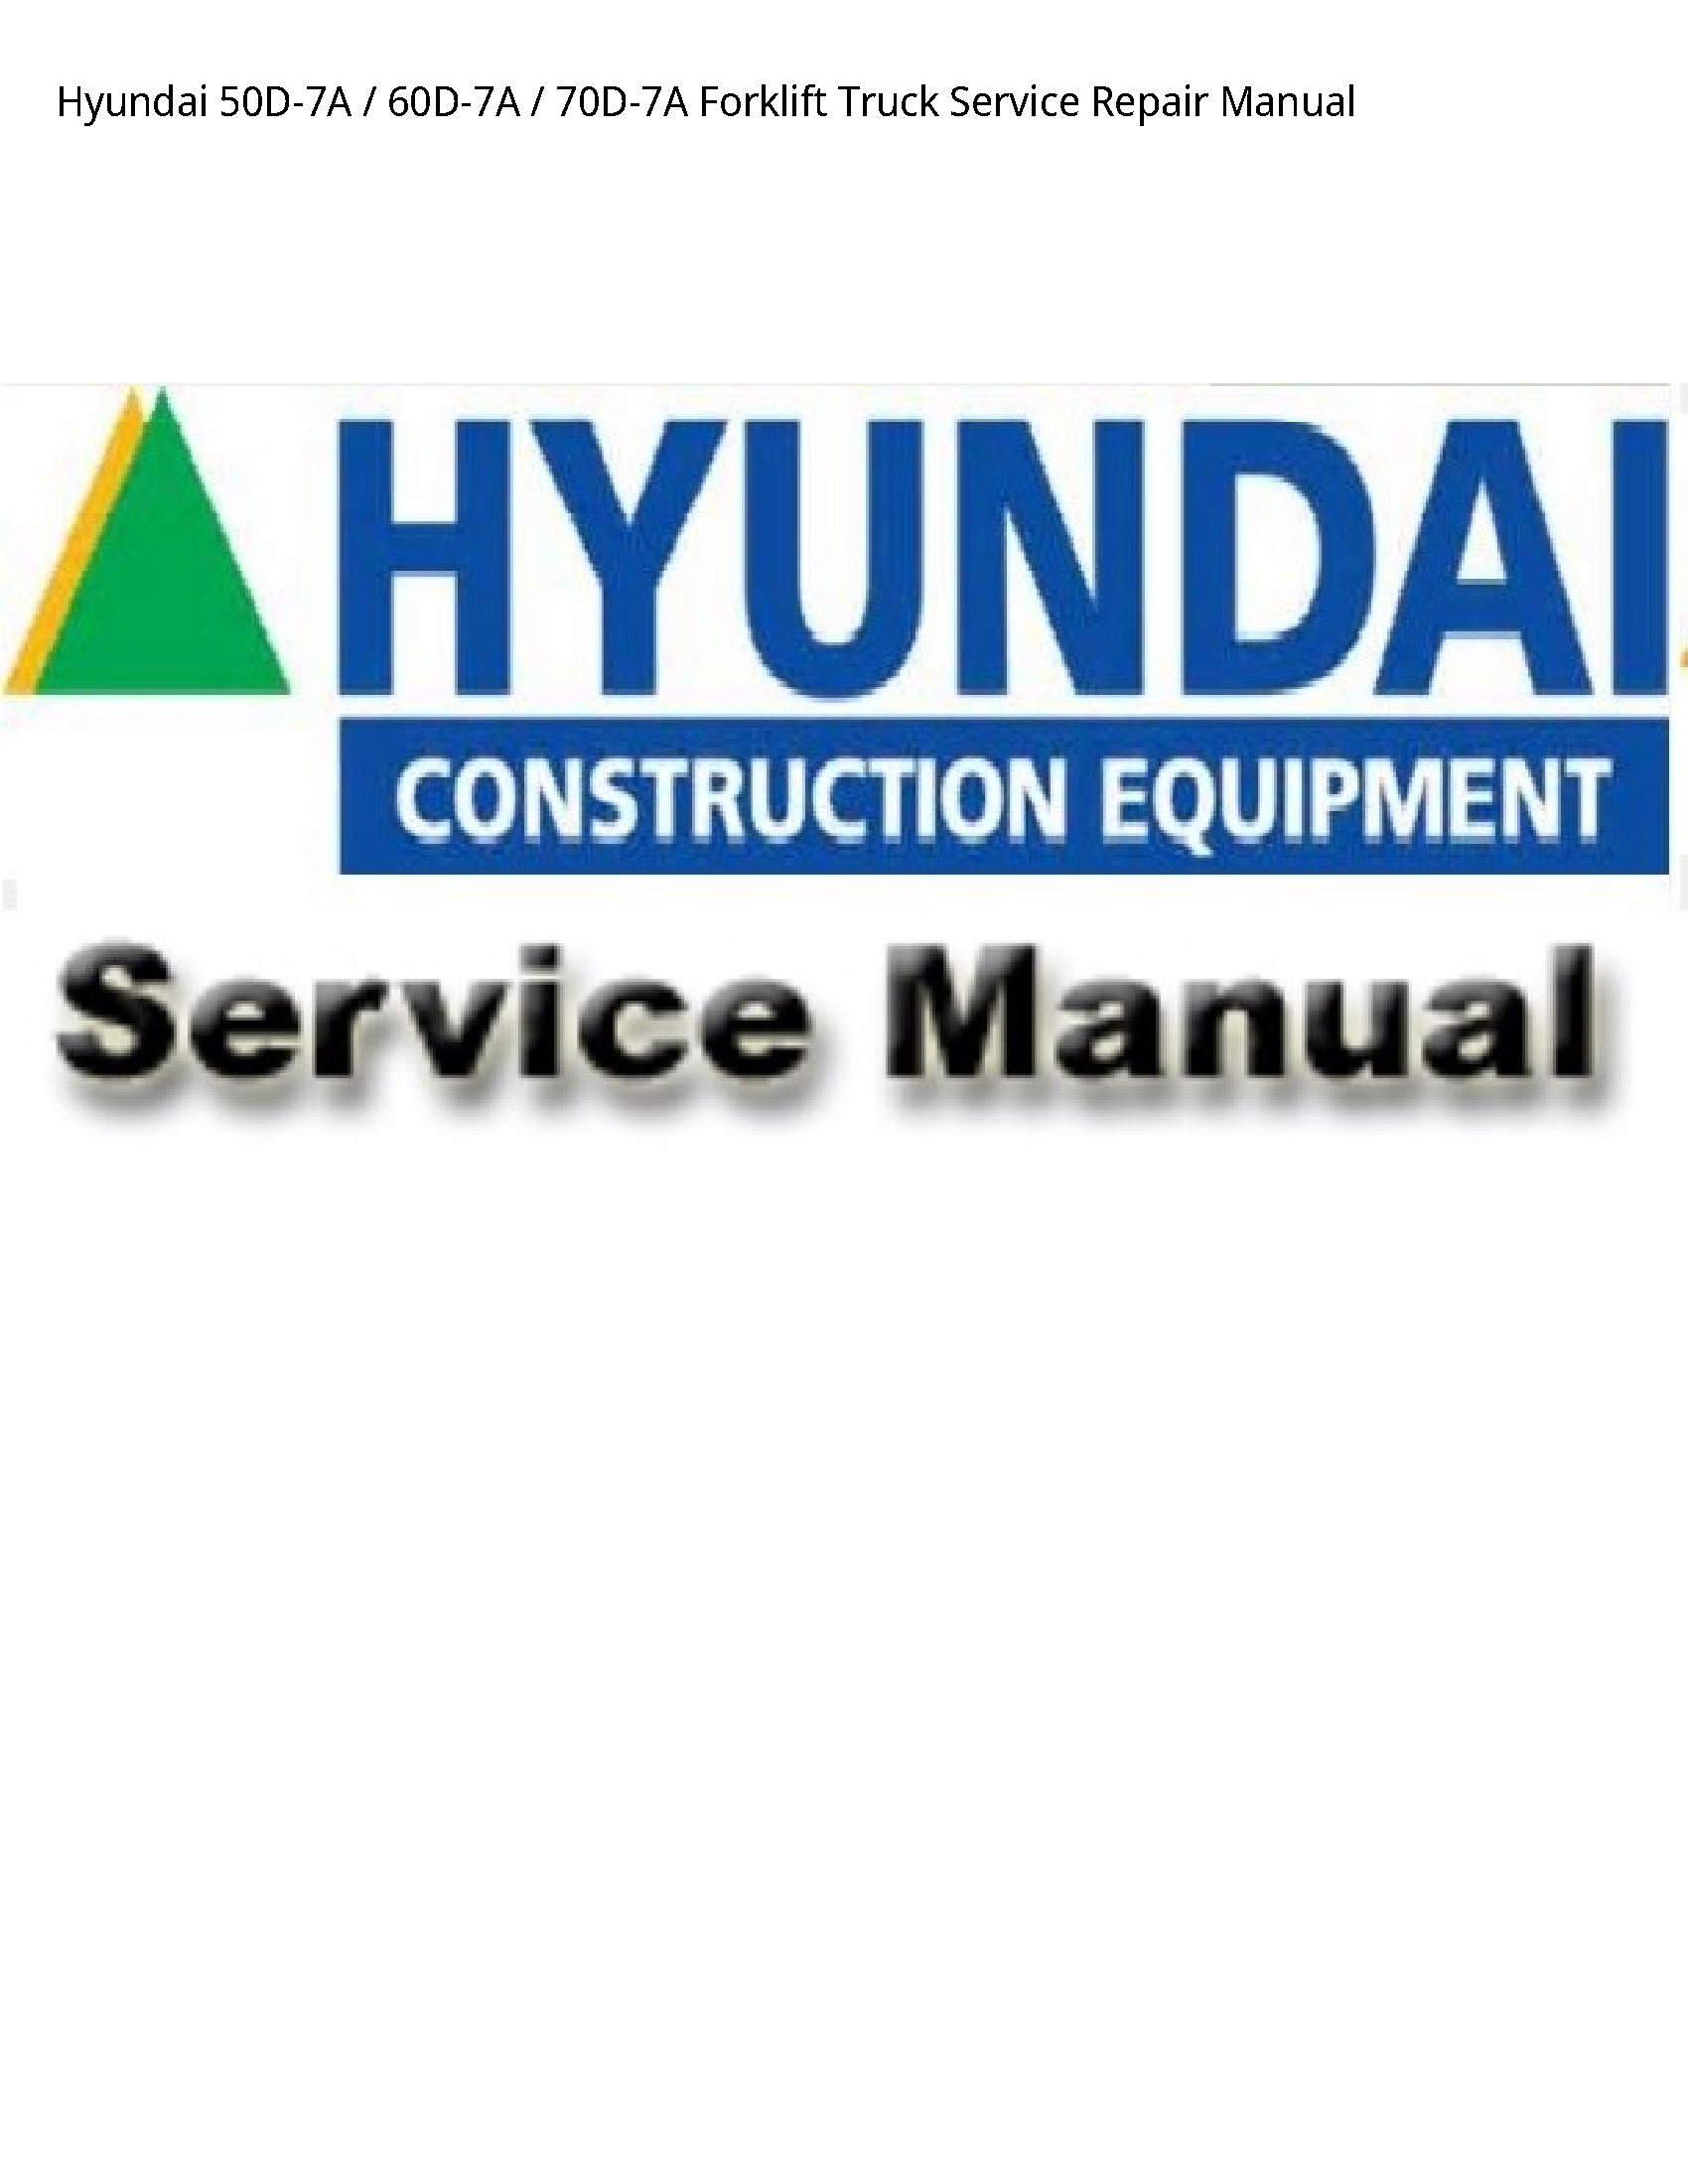 Hyundai 50D-7A Forklift Truck manual